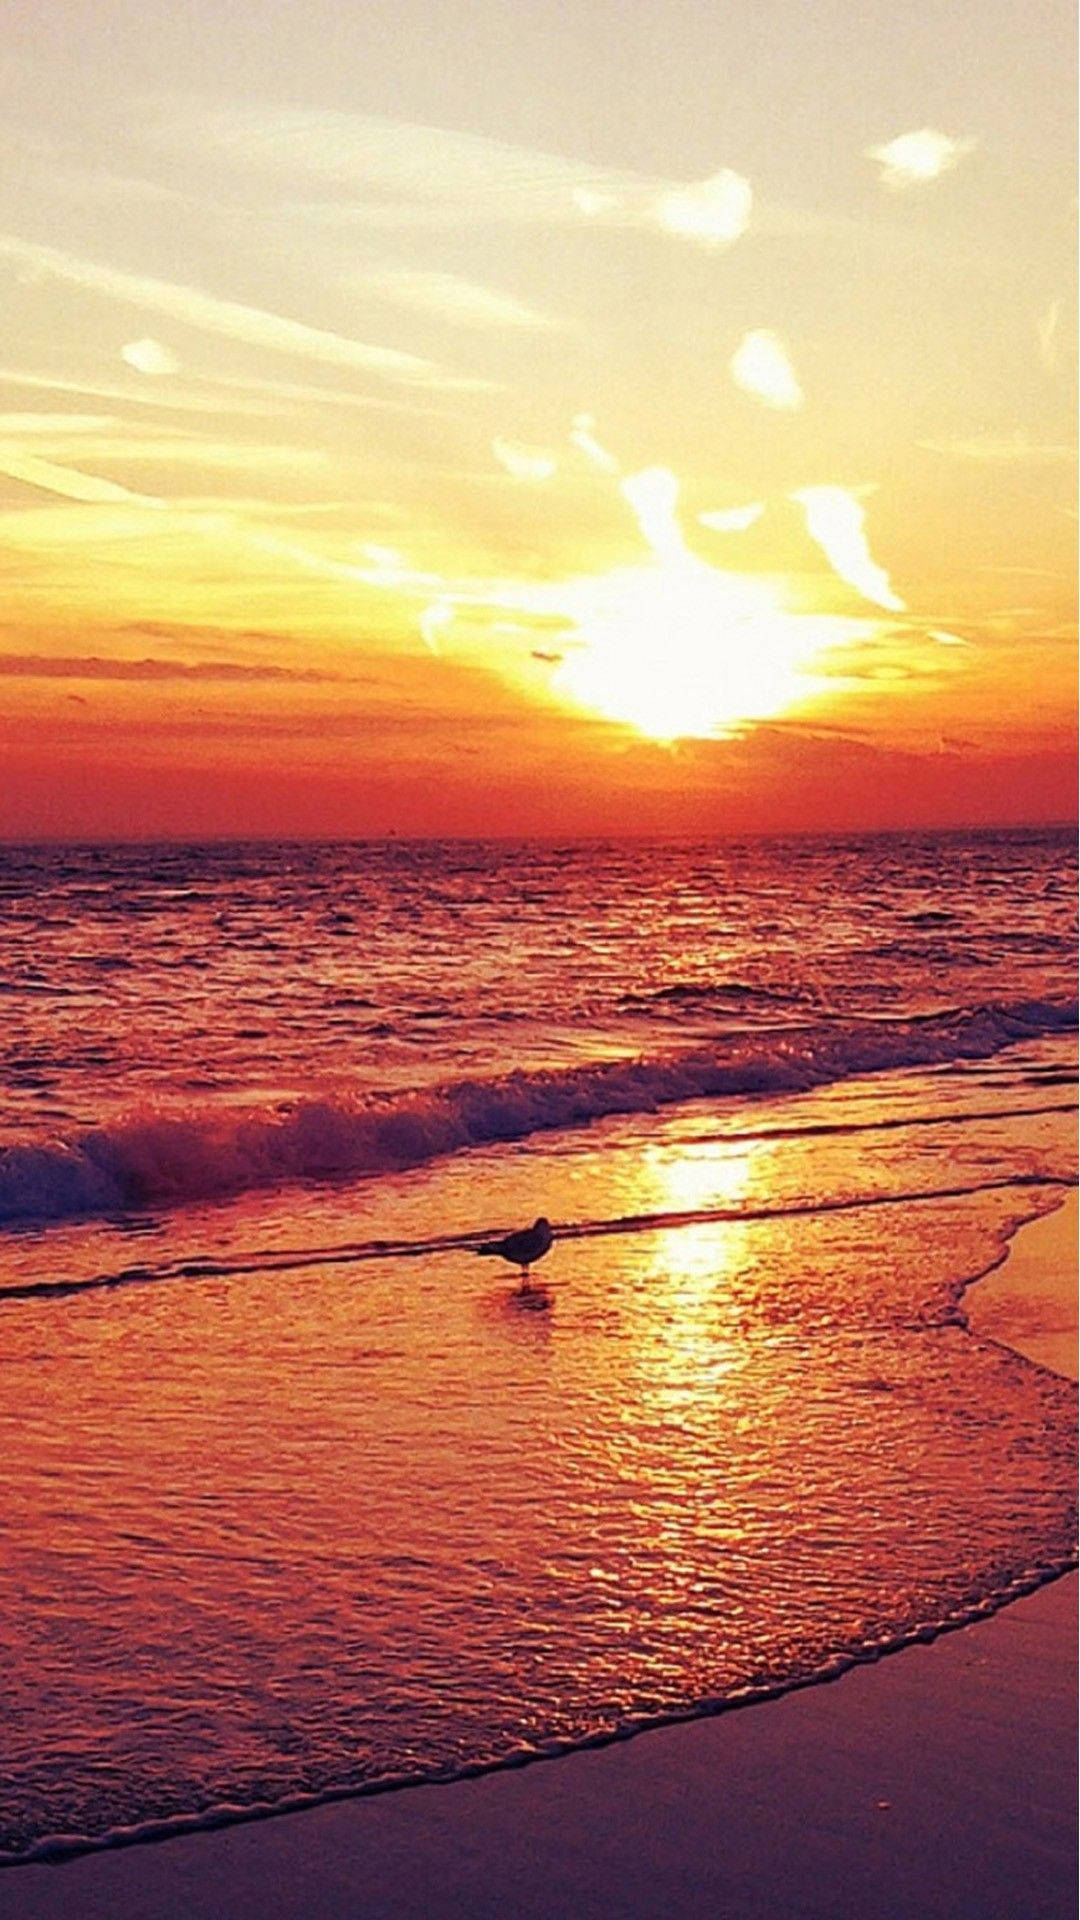 4k Iphone Bird On Beach At Sunset Background